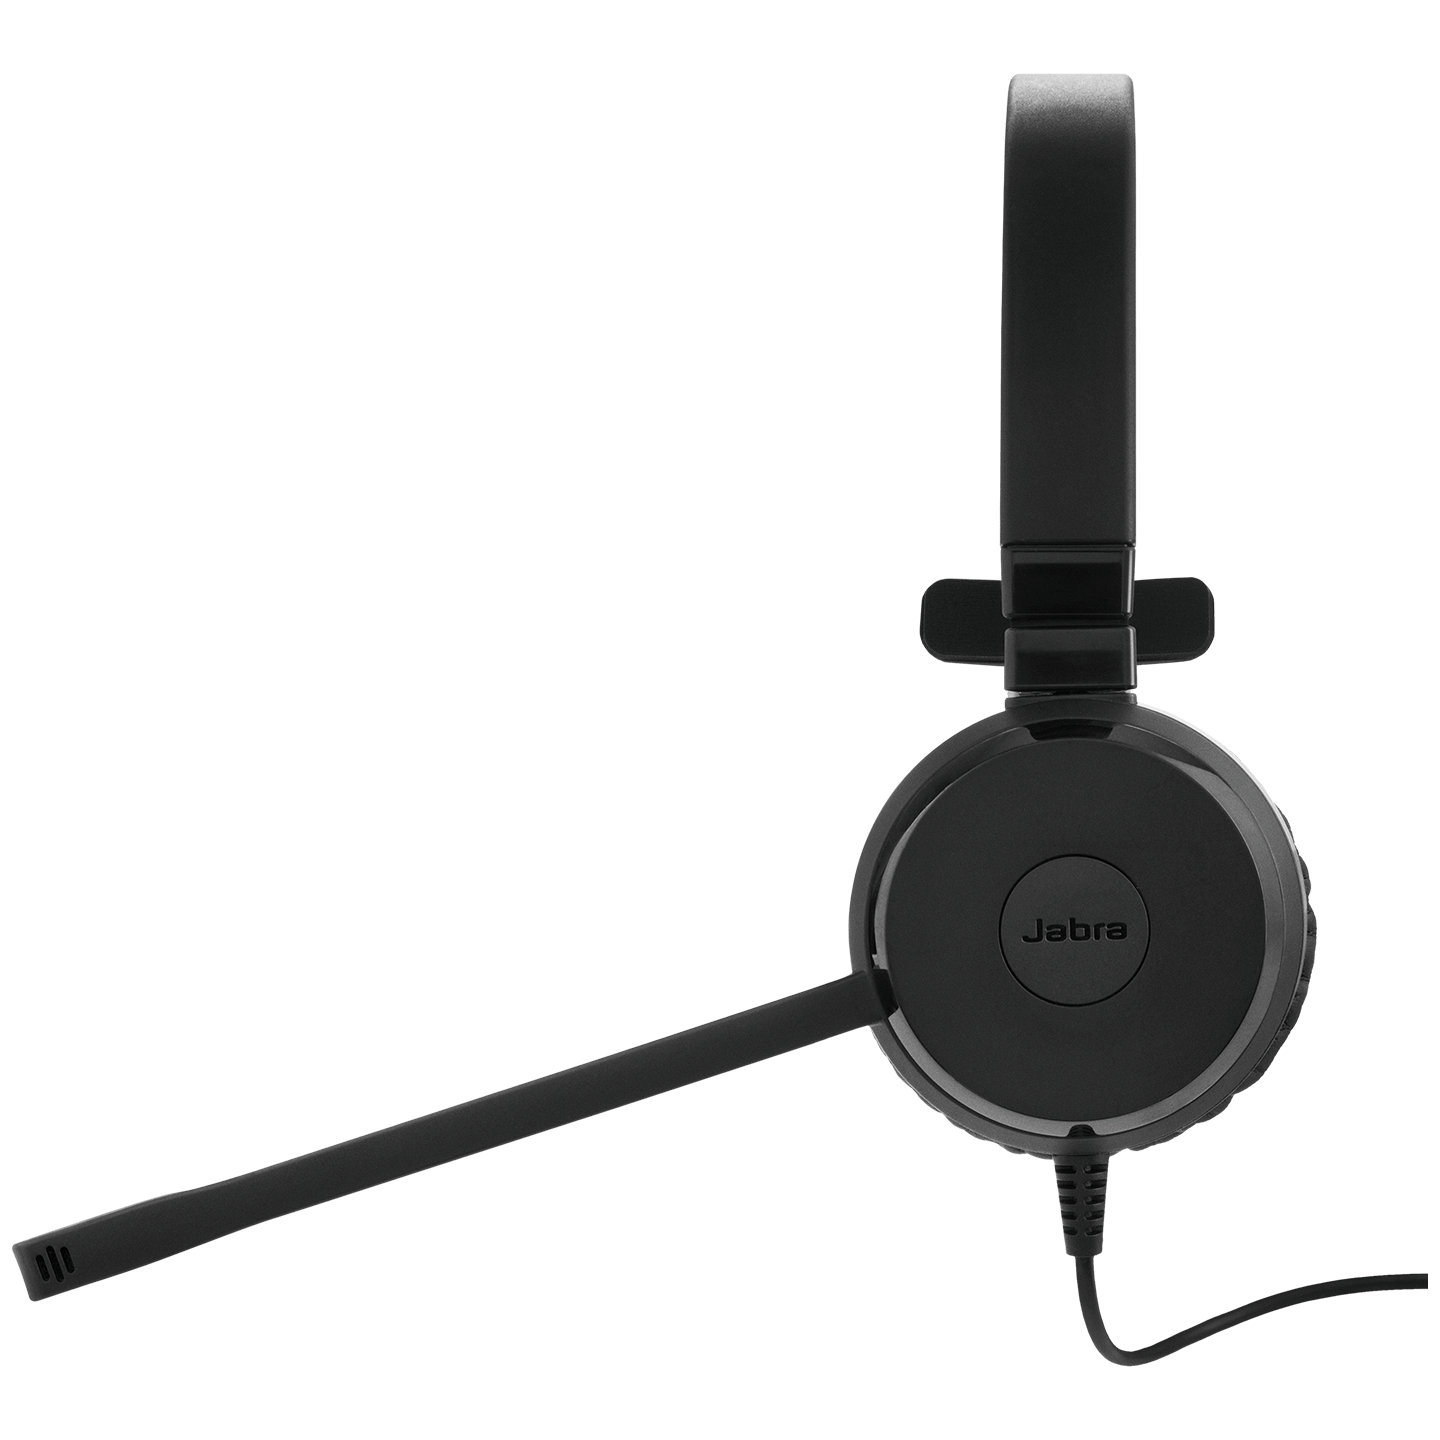 Jabra Evolve 20 UC Mono Headset Head-band Black